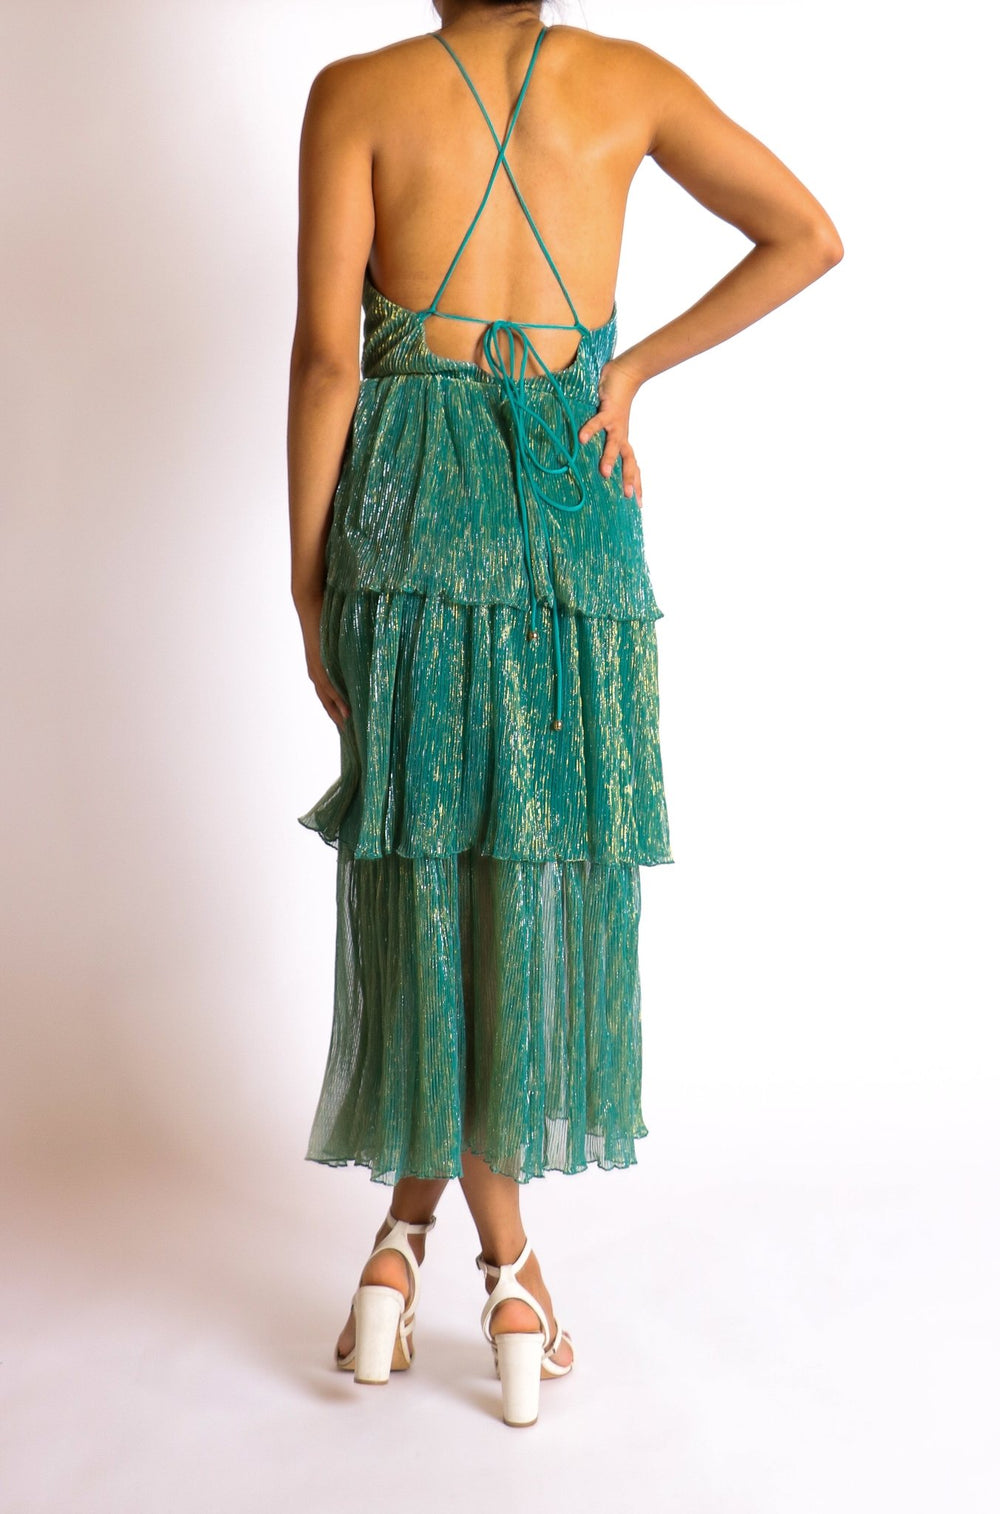 Miriam - Lend the Trend renta de vestidos mexico